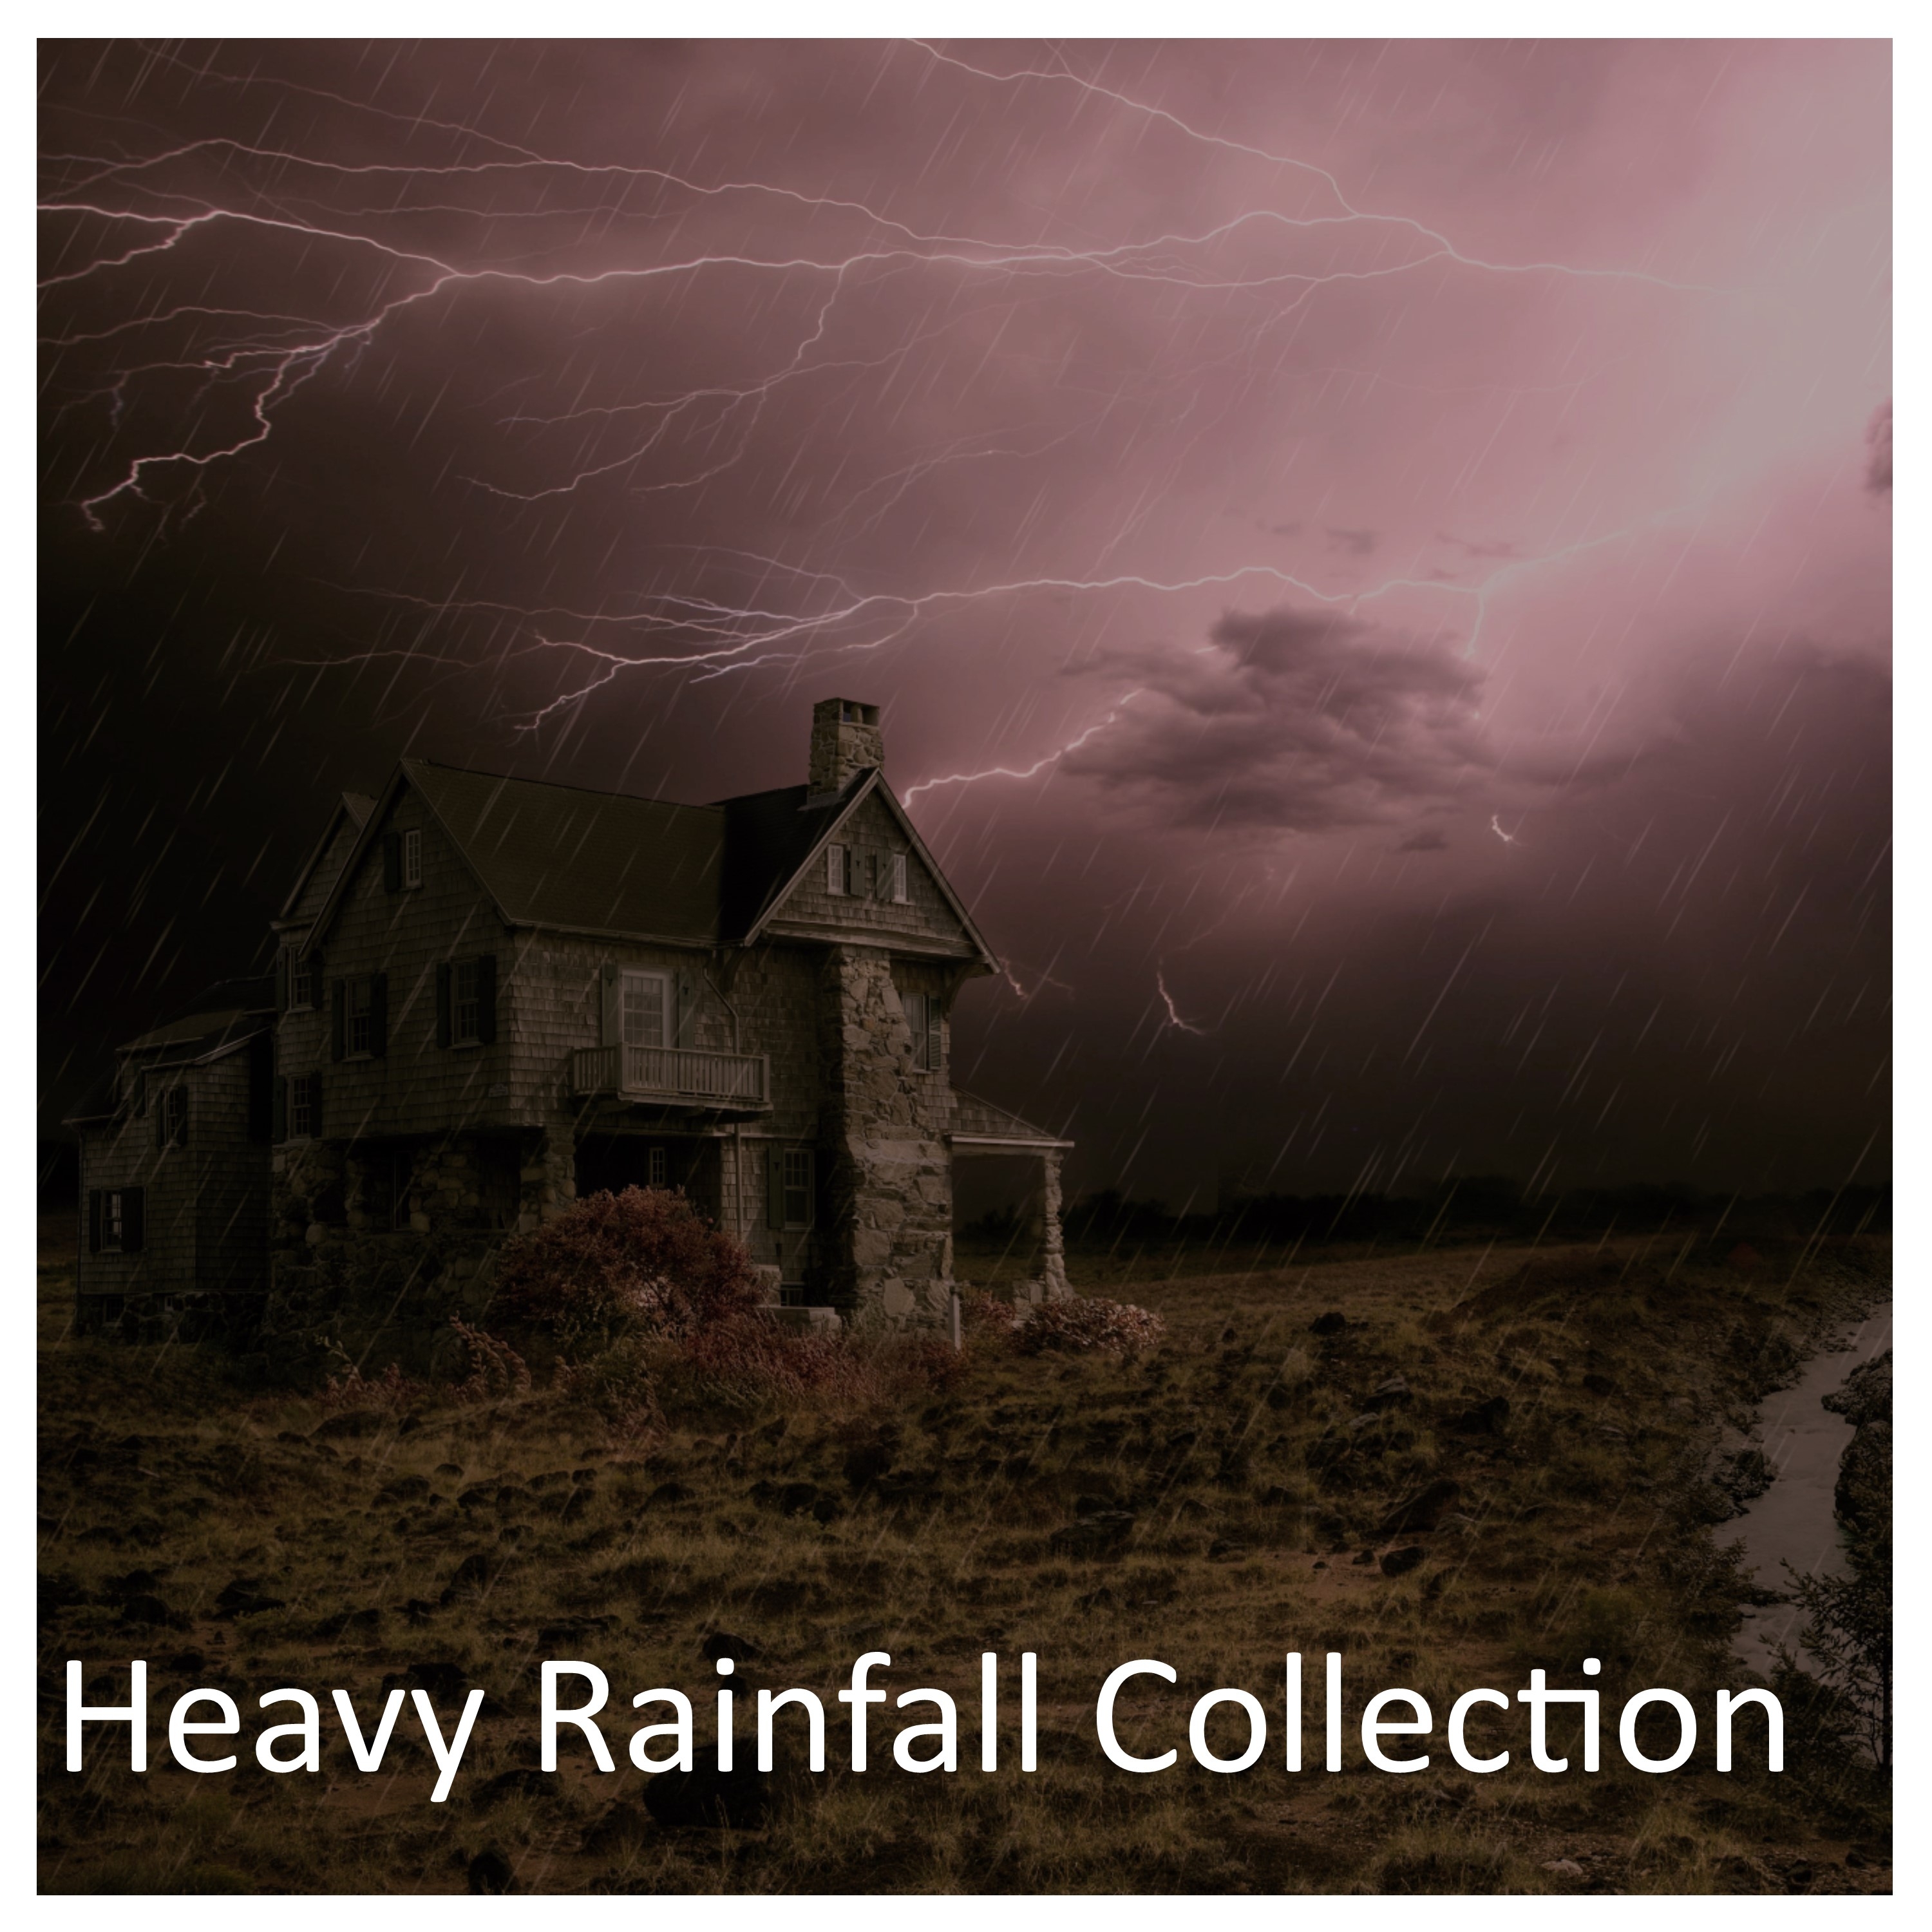 19 Heavy Rain Sounds - Nature's Best White Noise